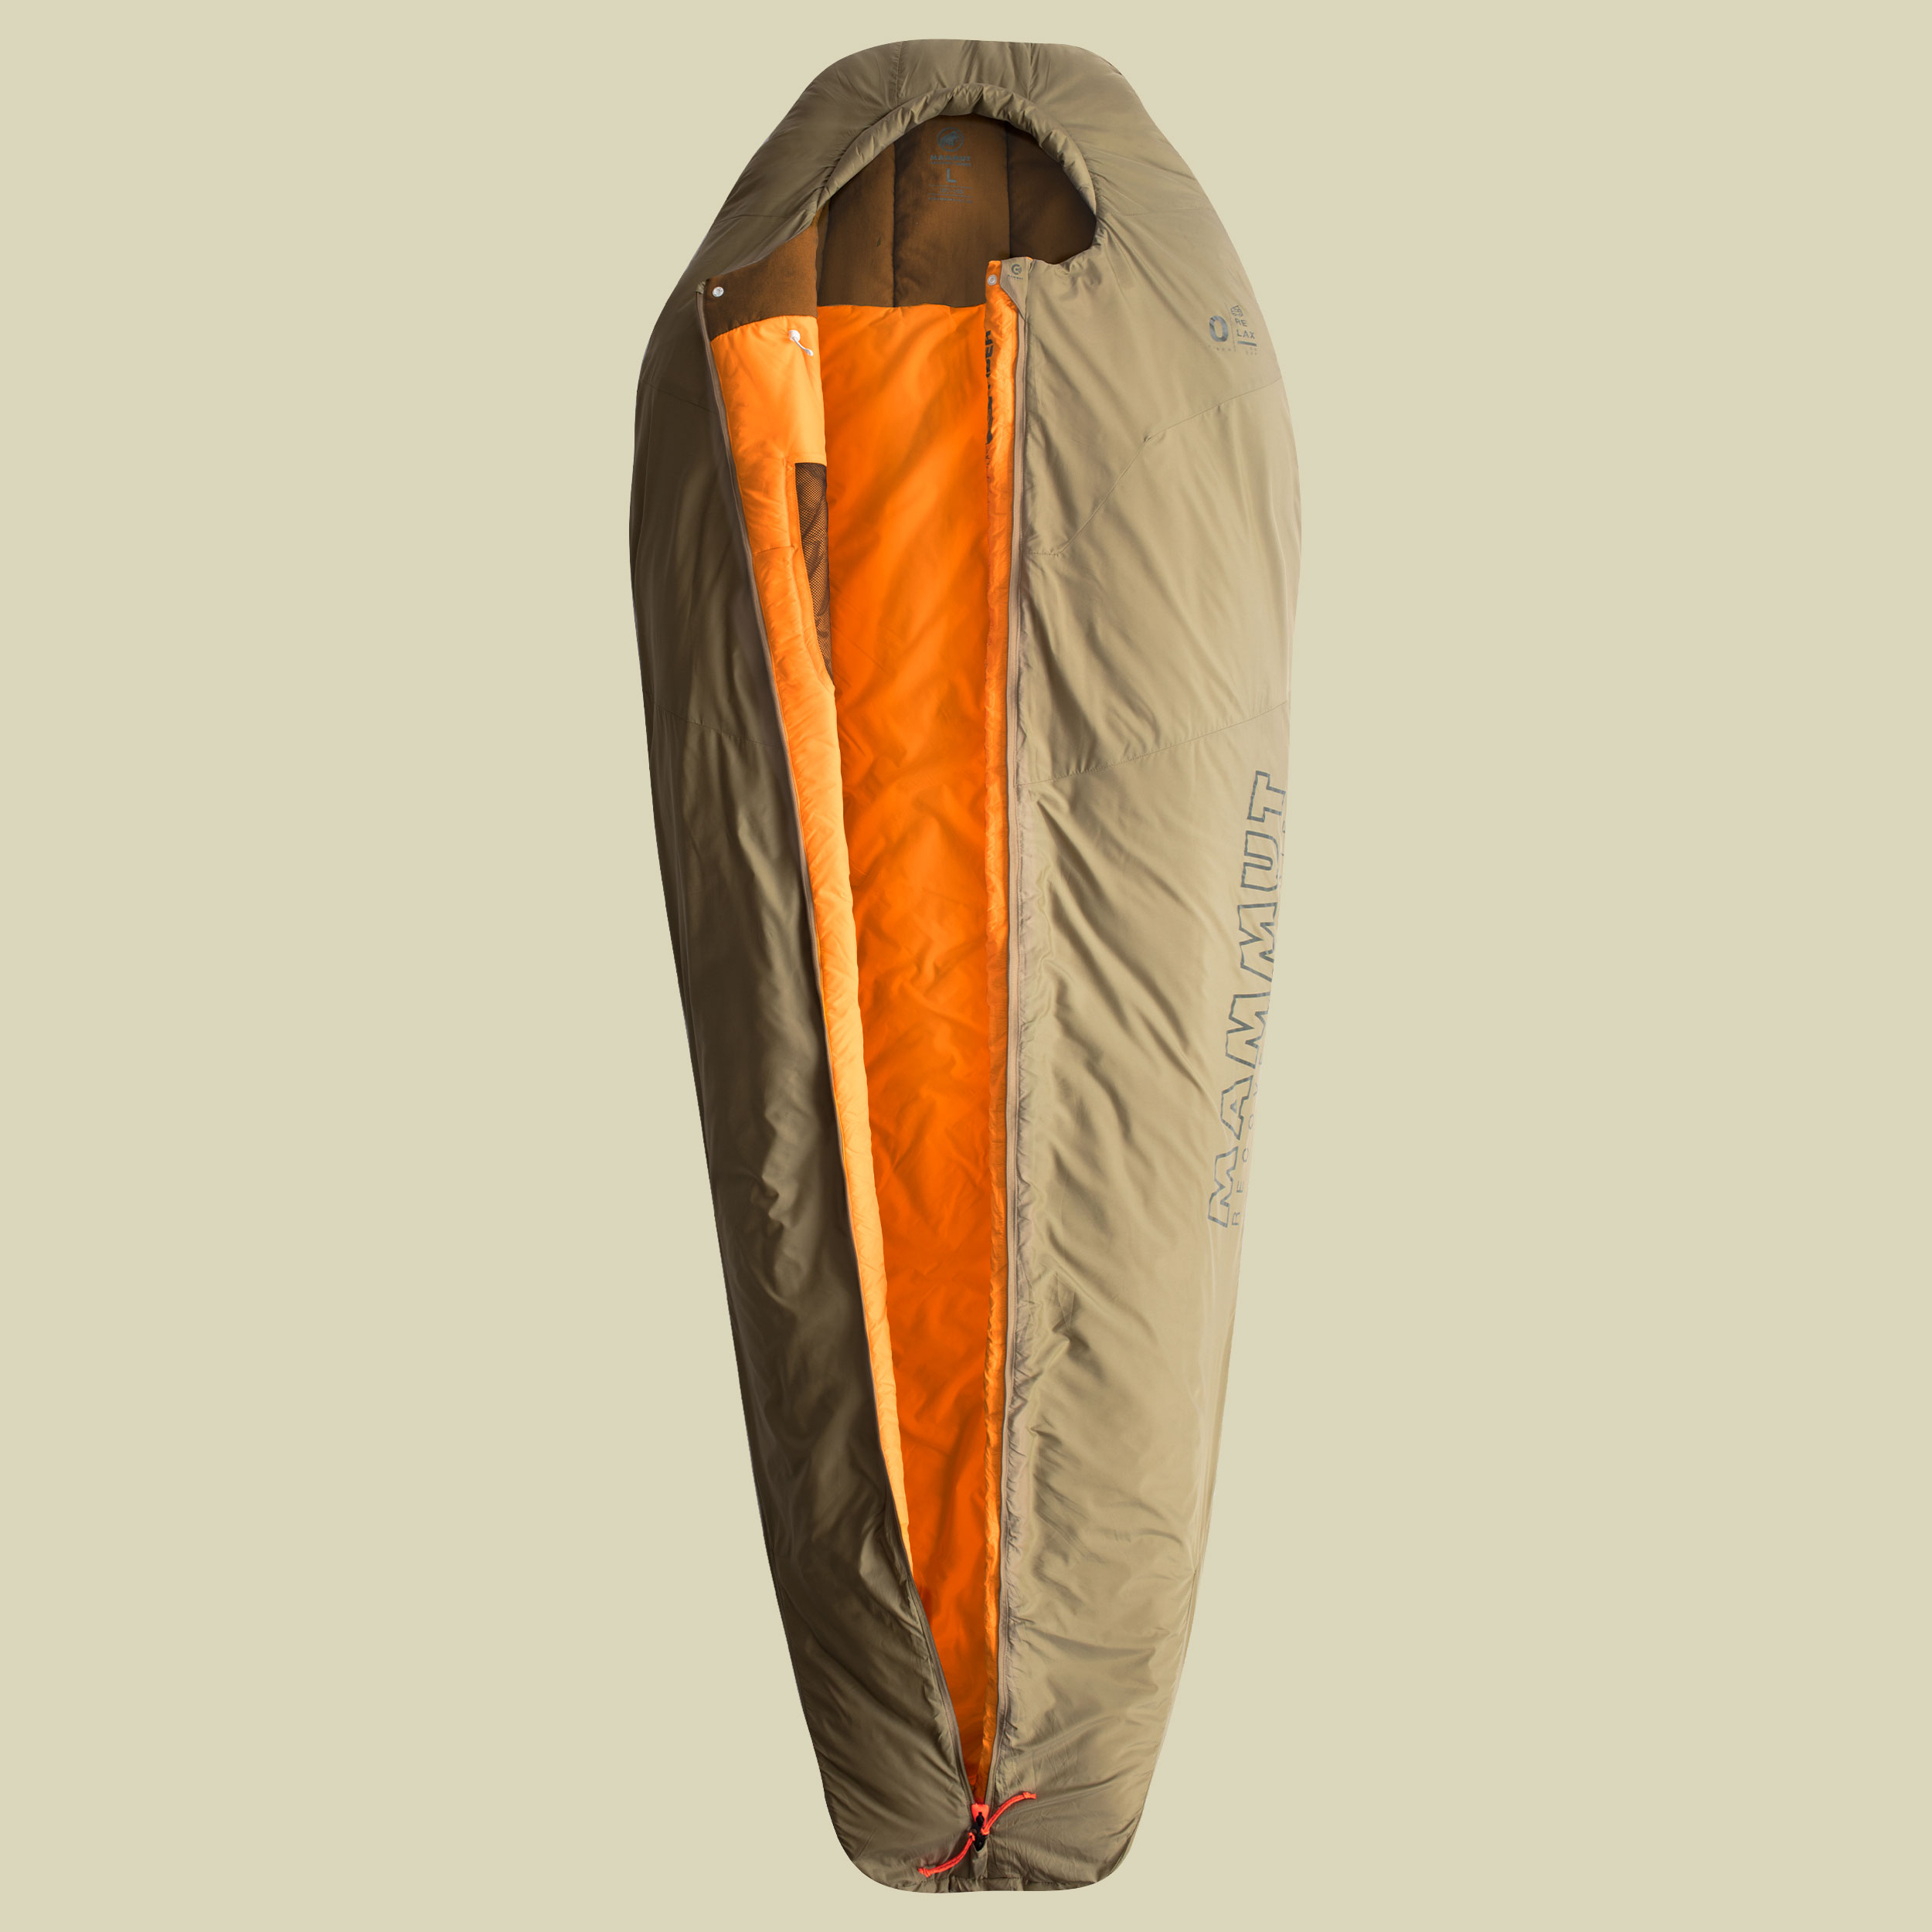 Relax Fiber Bag 0C bis Körpergröße 195 cm (L) Farbe olive, Reißverschluss Mitte